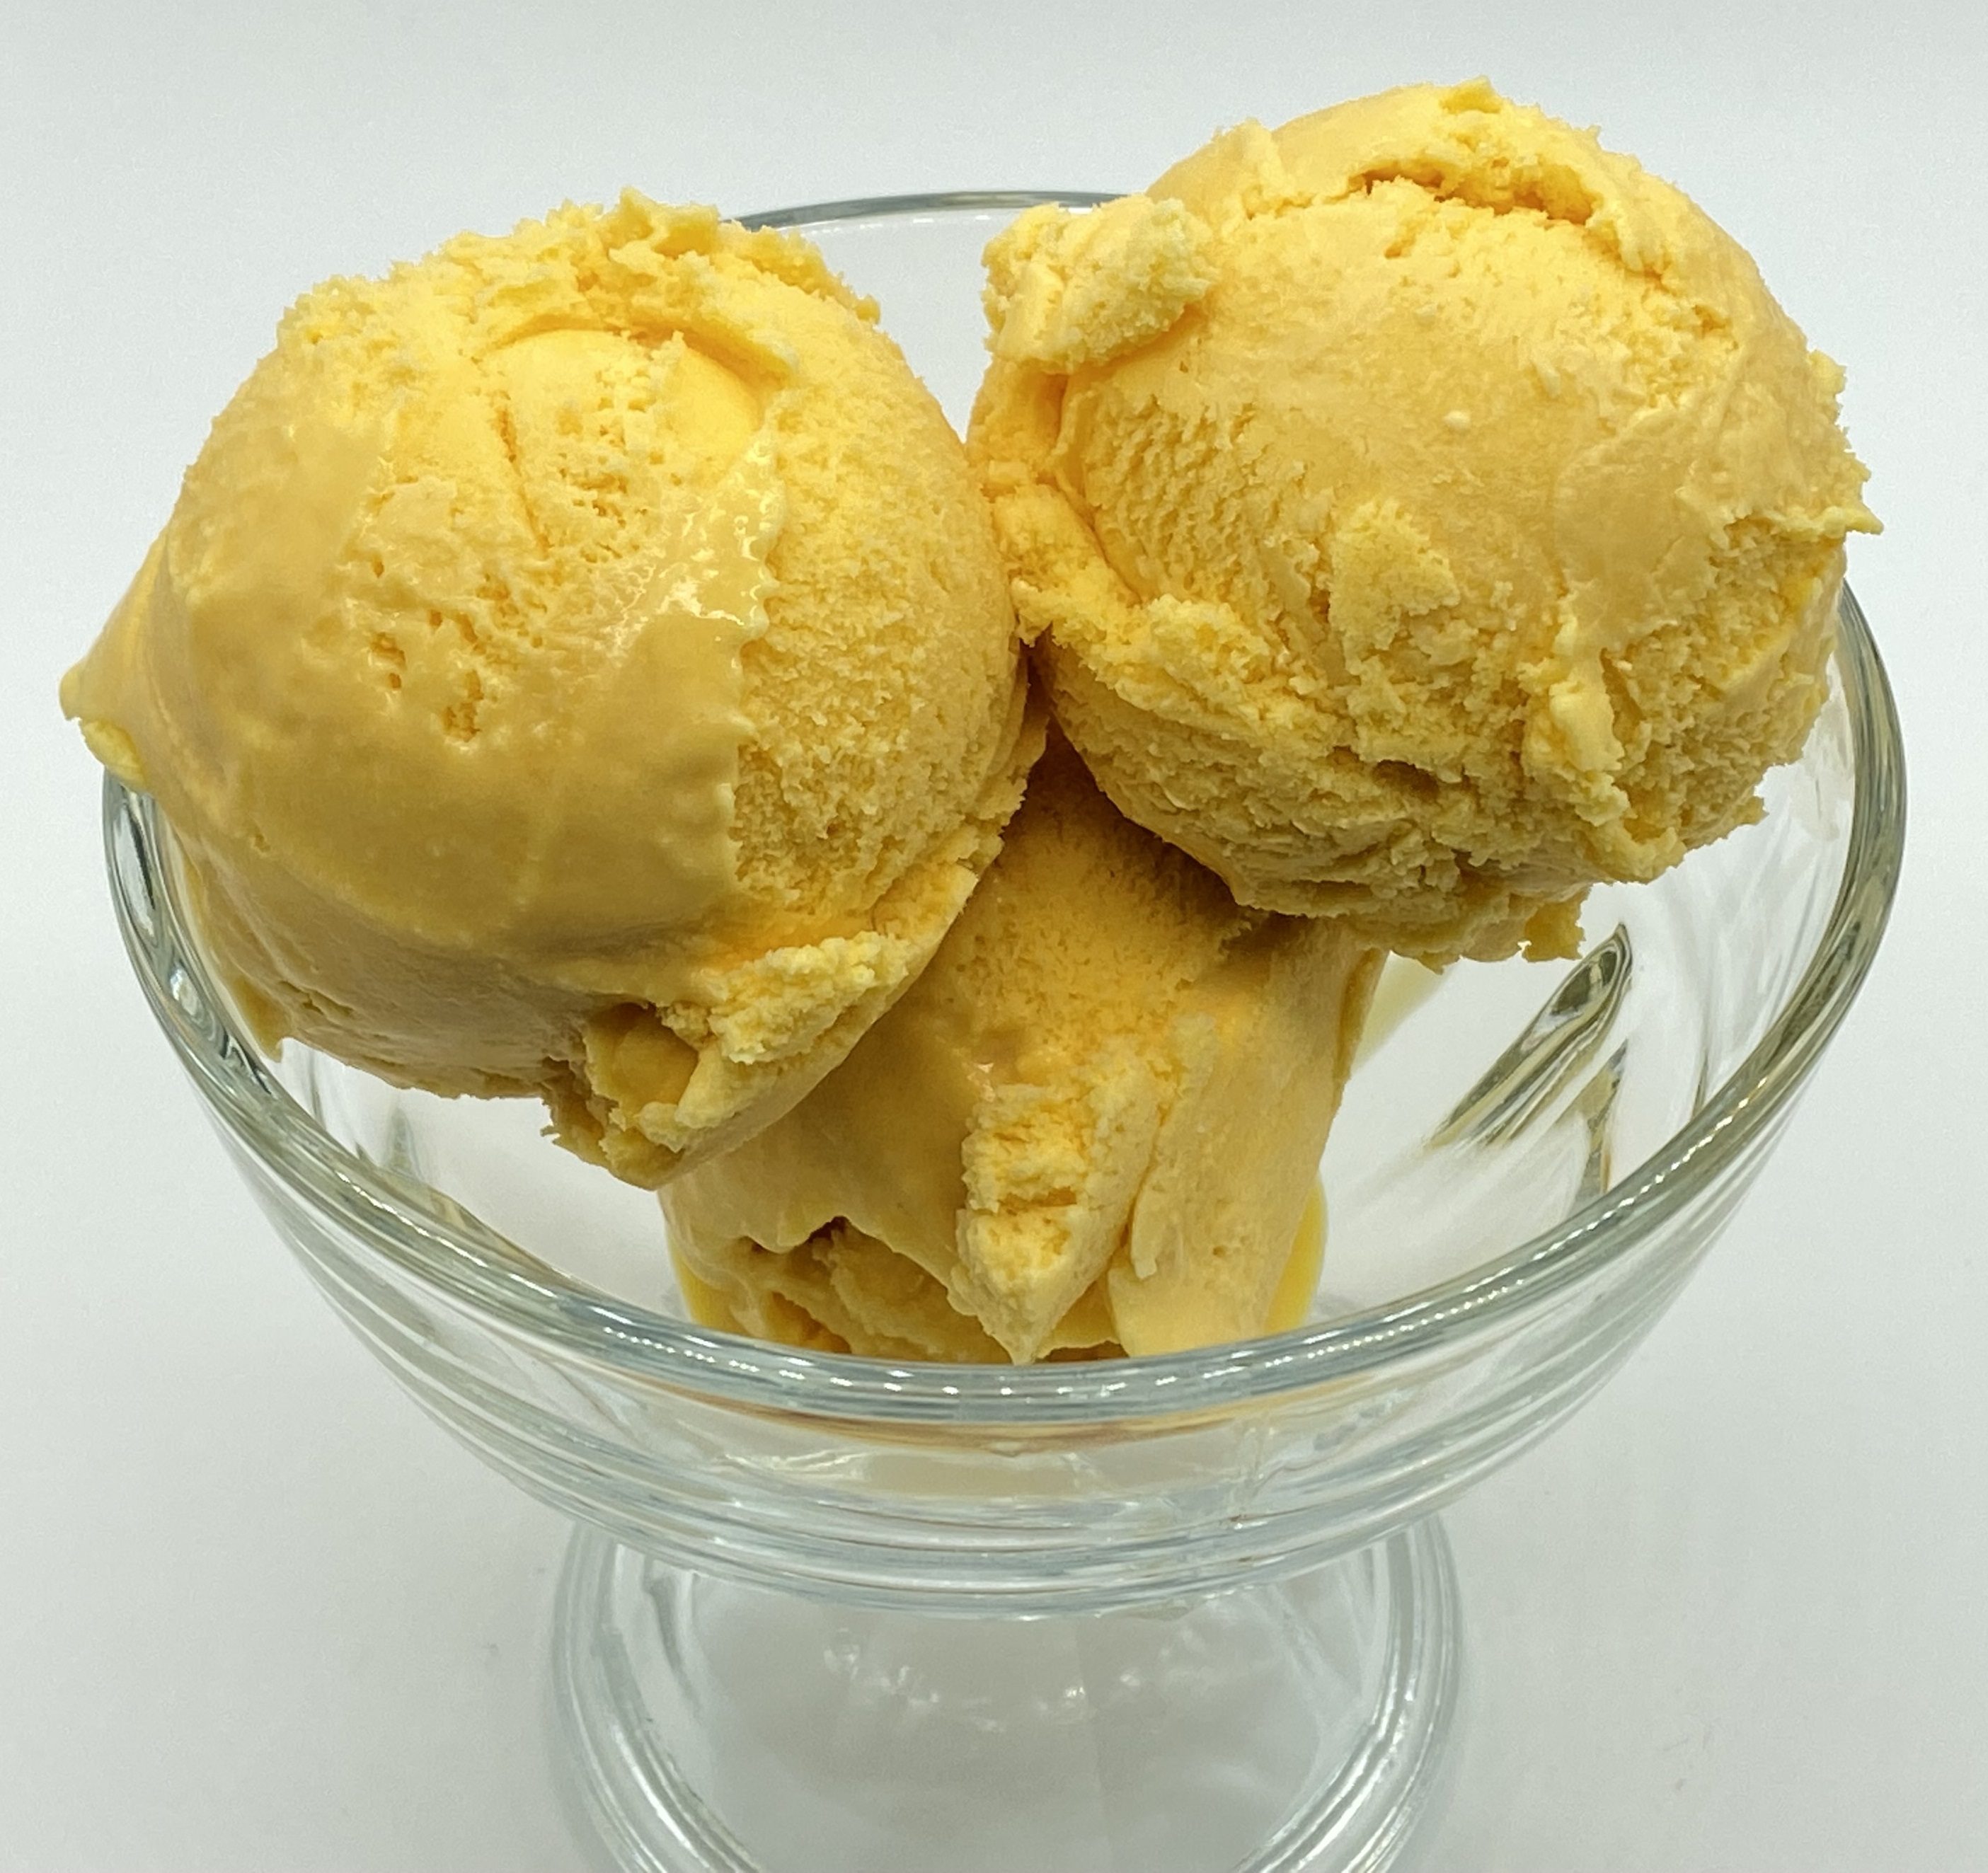 Annatto extract bright orange yellow ice cream